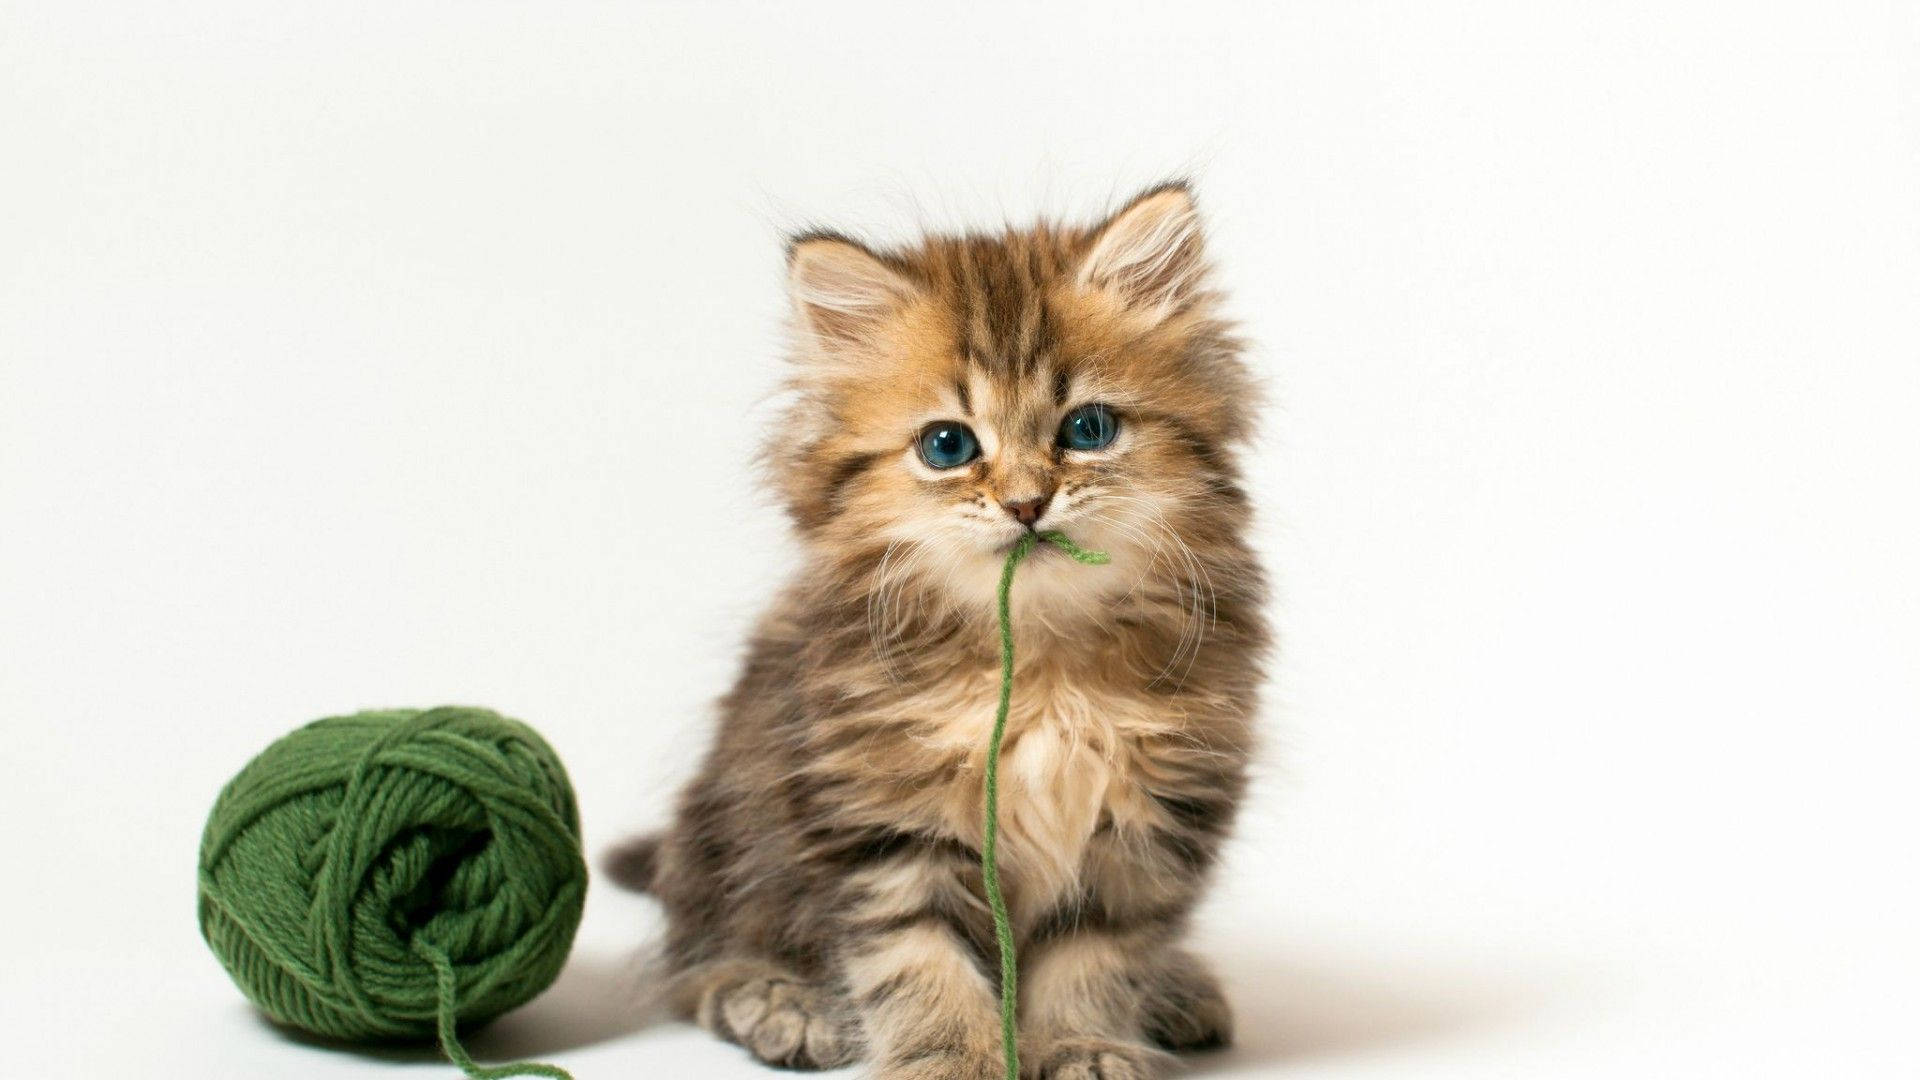 Kitten With Yarn Ball